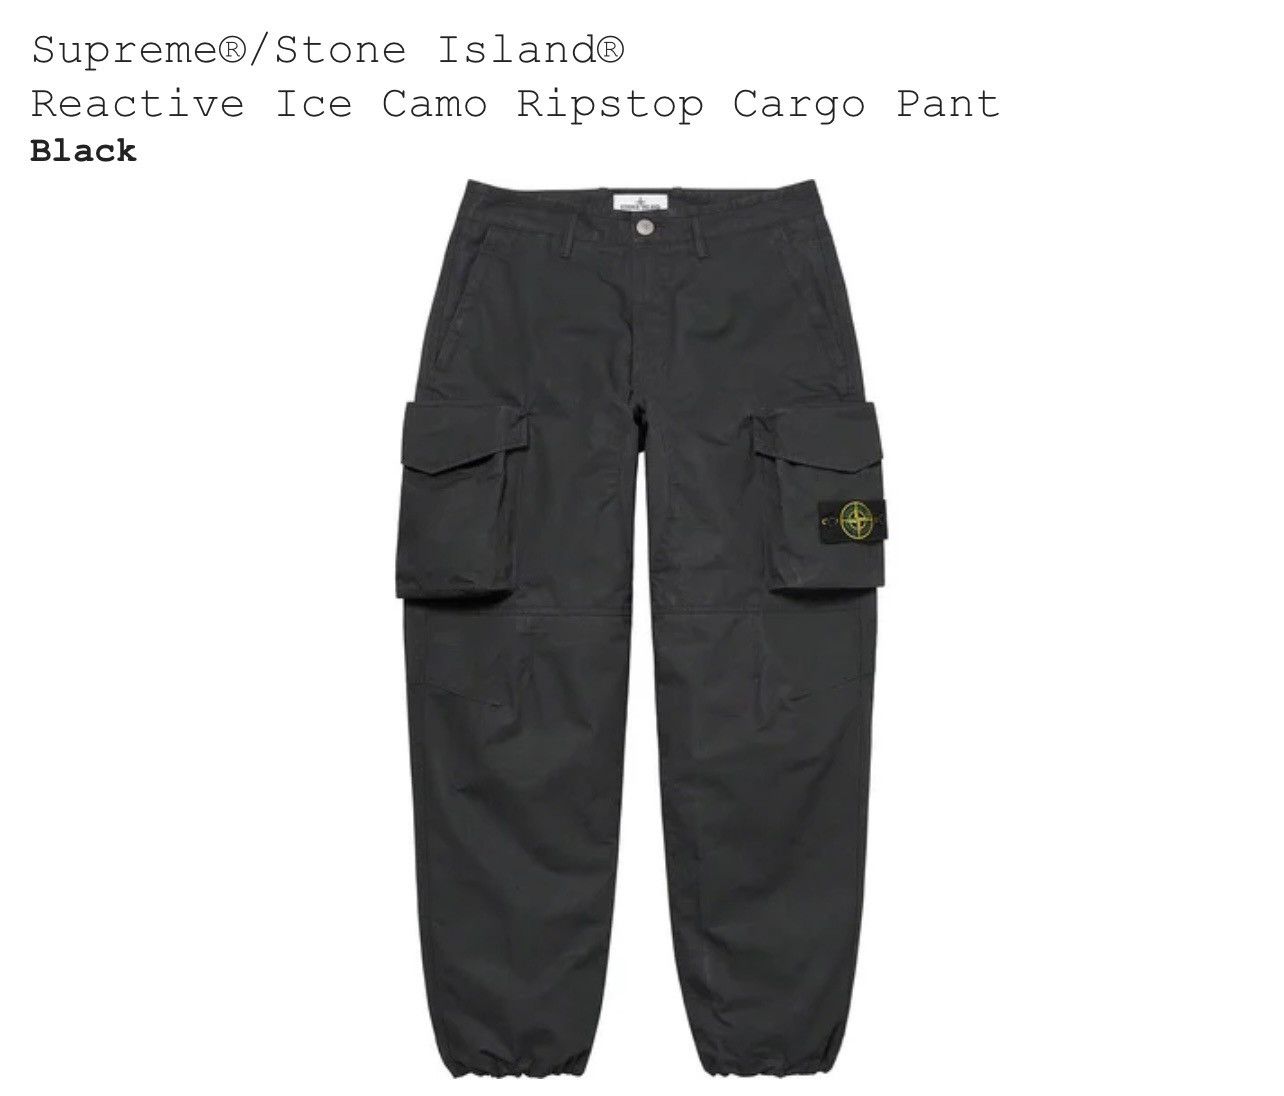 Supreme Supreme x Stone Island reactive ice camo cargo pants | Grailed